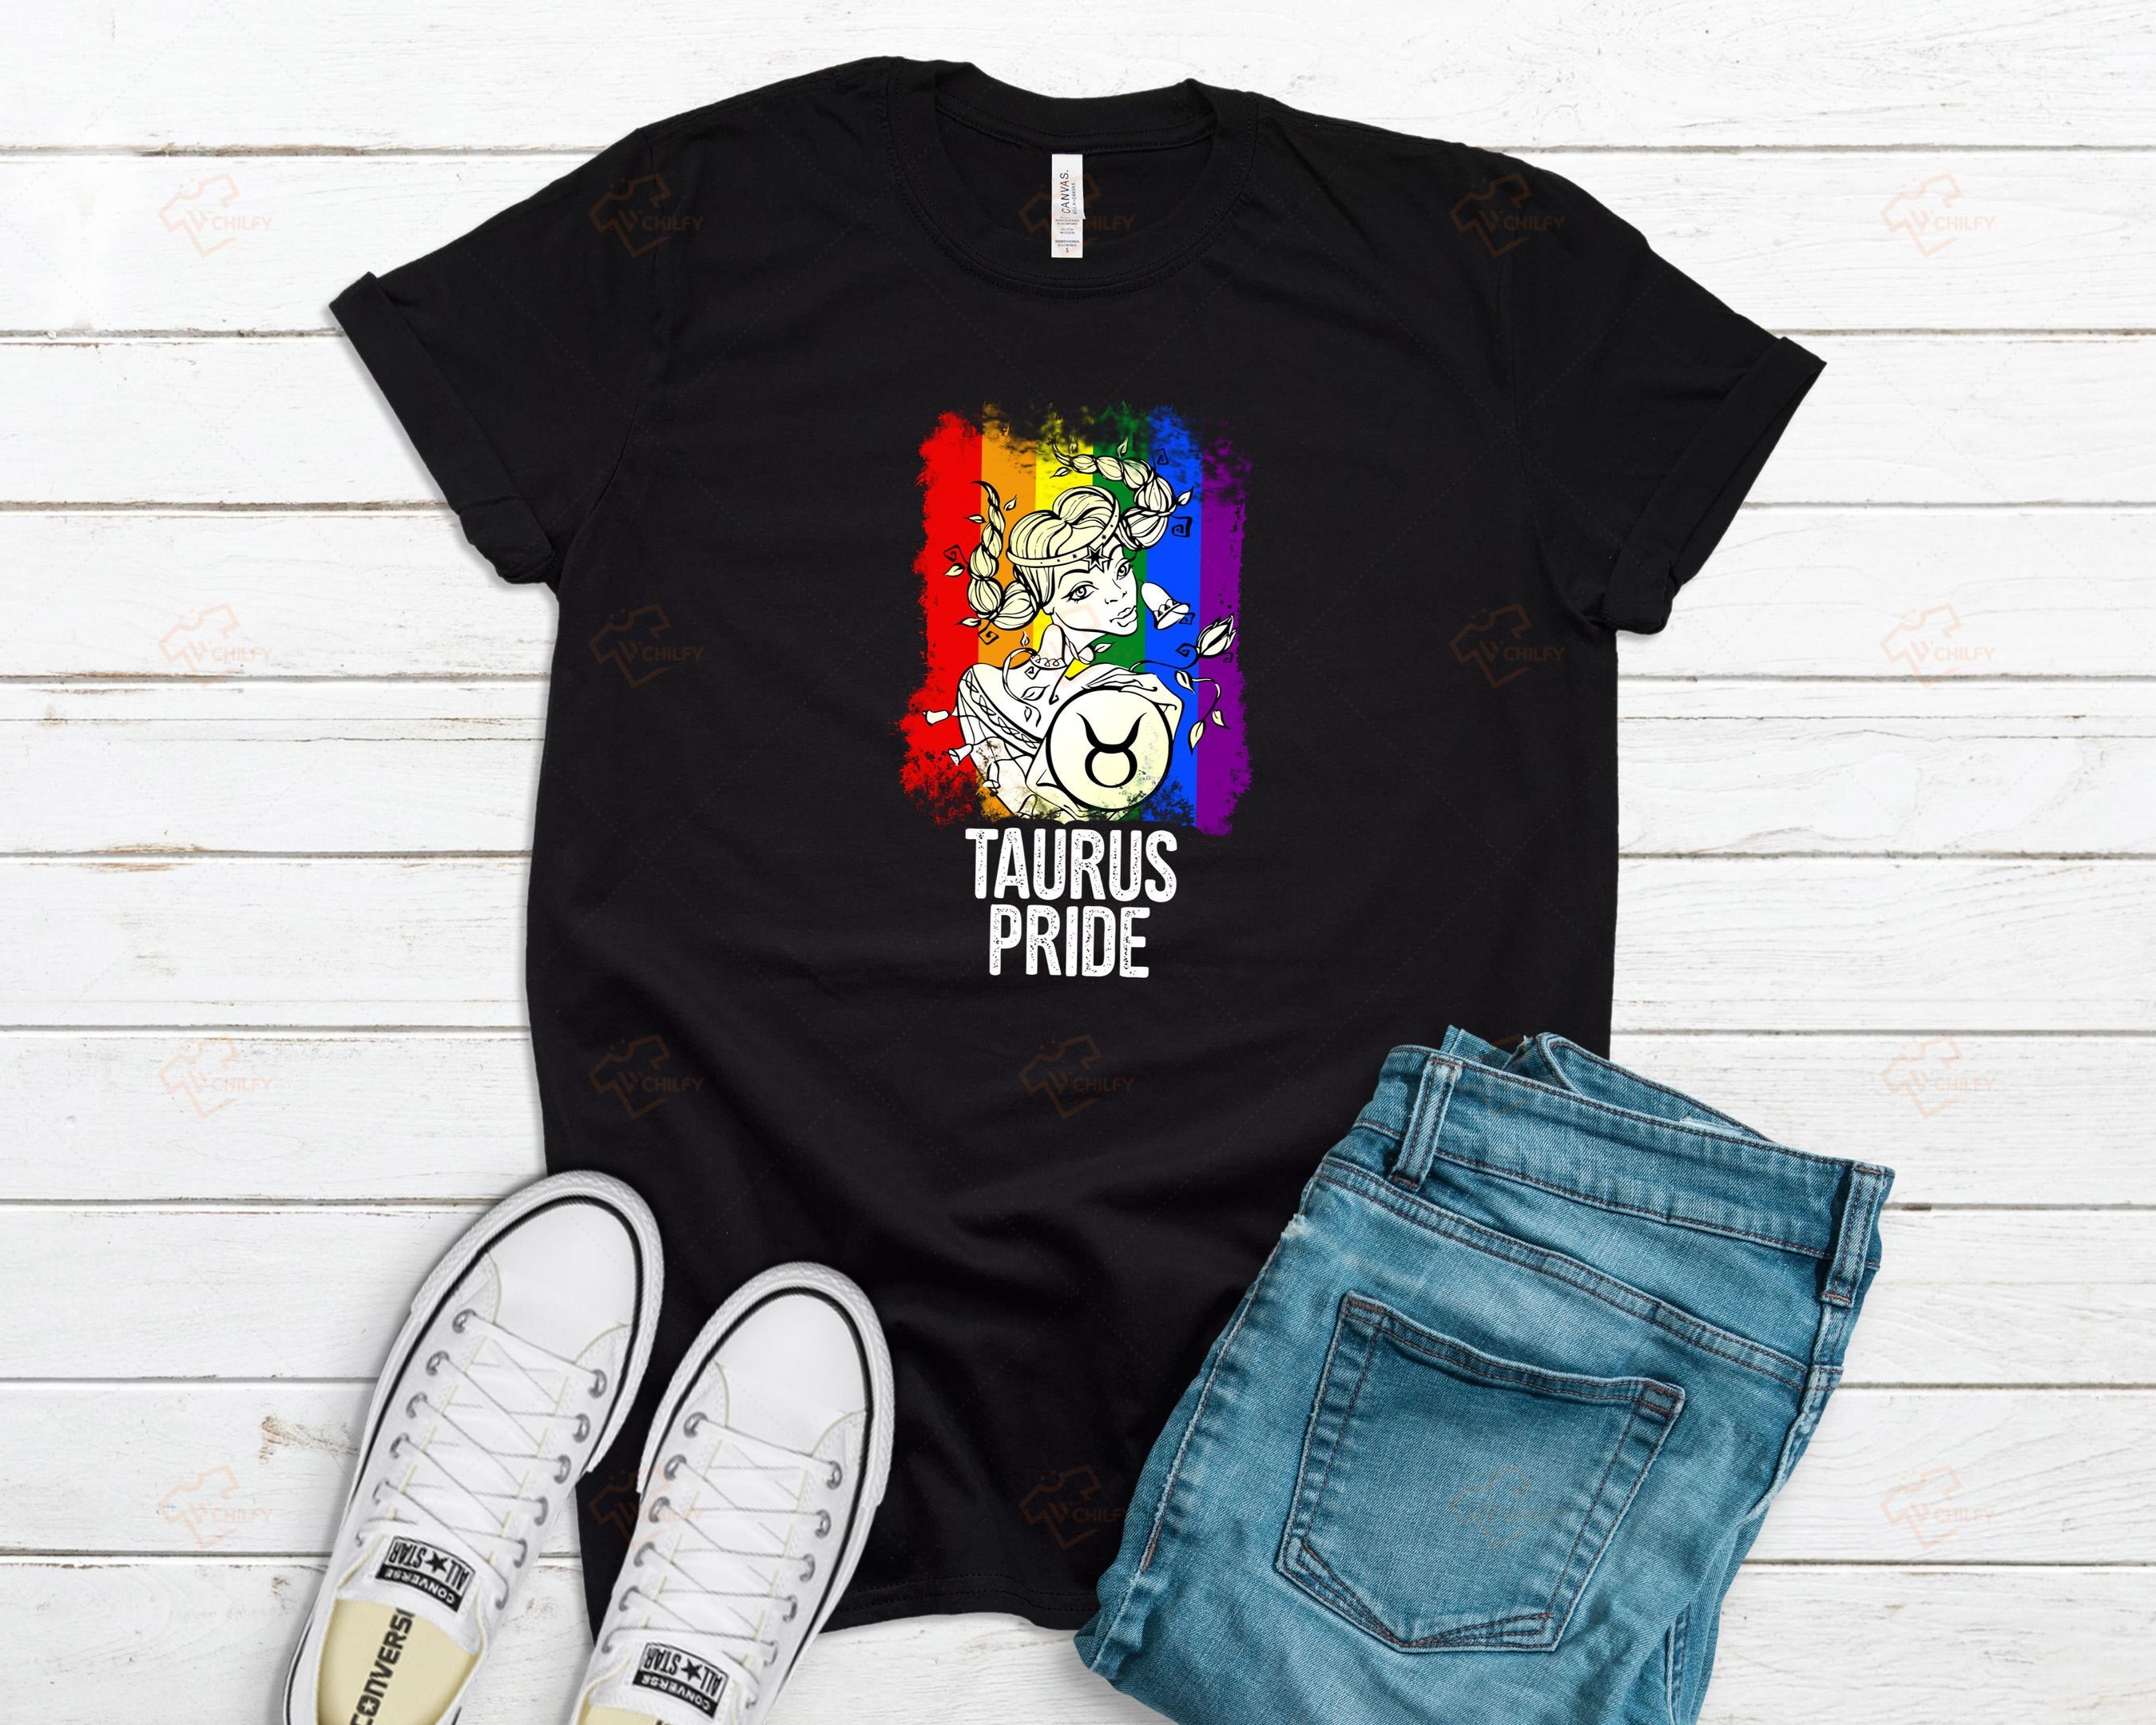 12 Signs Of The Zodiac Taurus Shirt, Lgbt Shirt, Lgbt Pride Shirt, Lgbt Queer, Lgbt Zodiac Shirt